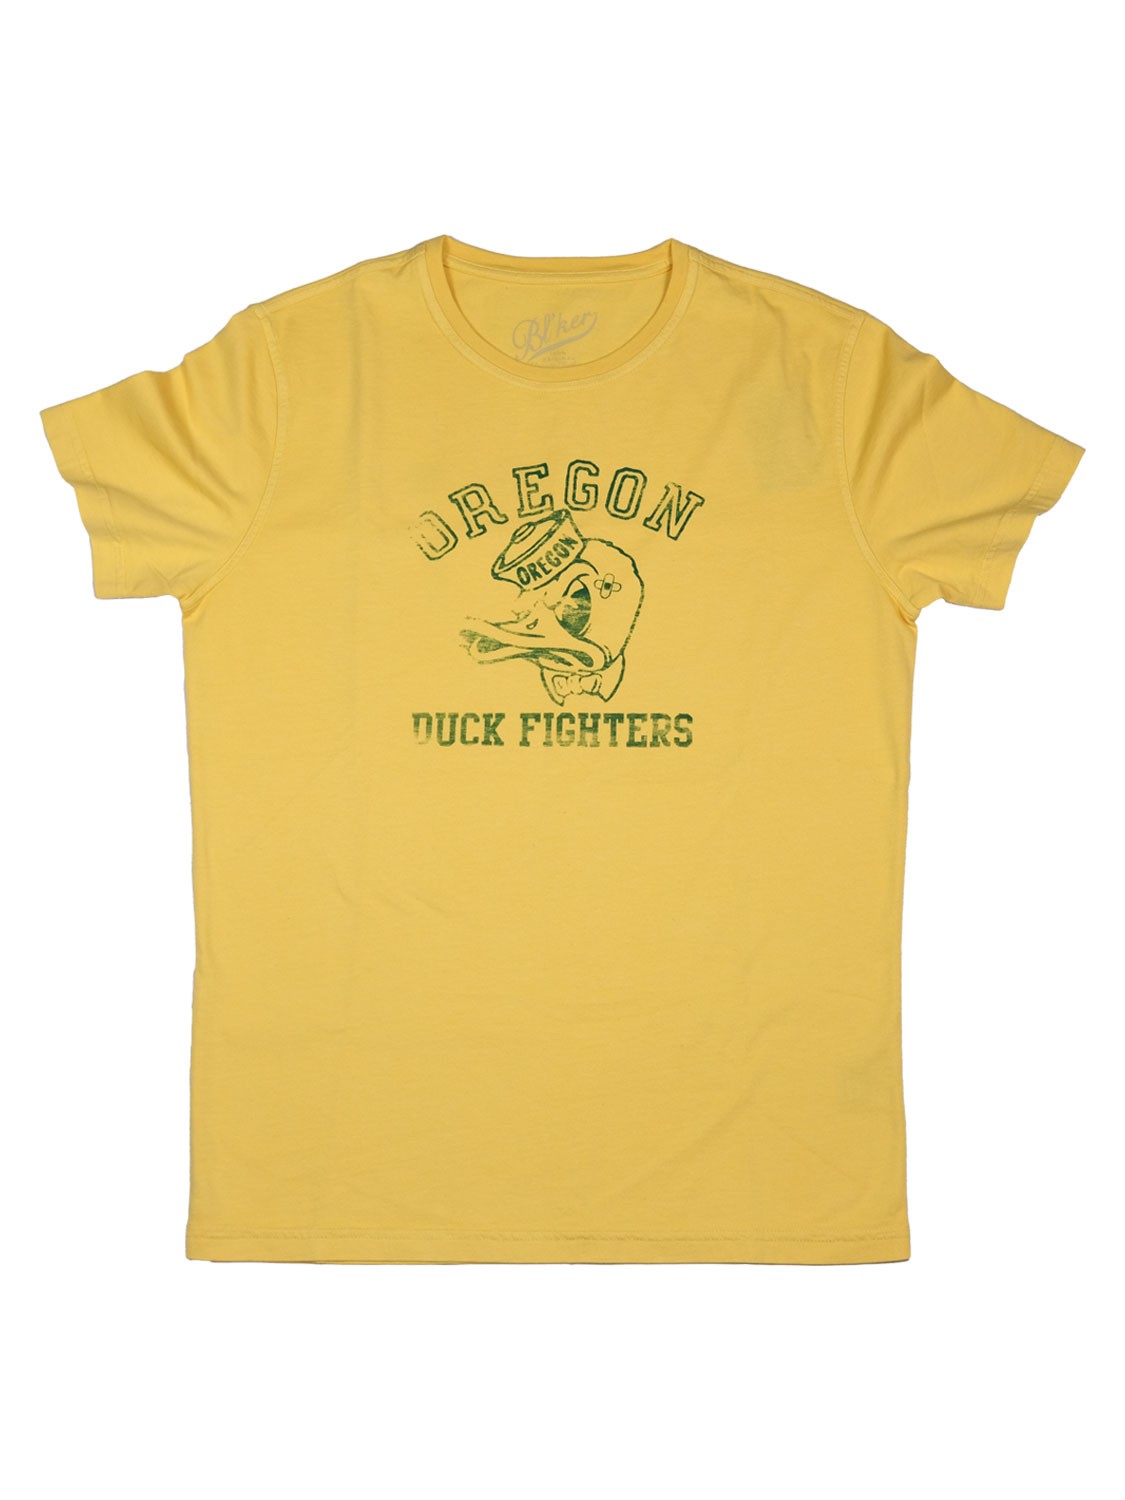 Bl'ker Men's T-shirt Graphic Oregon Duck Fighter